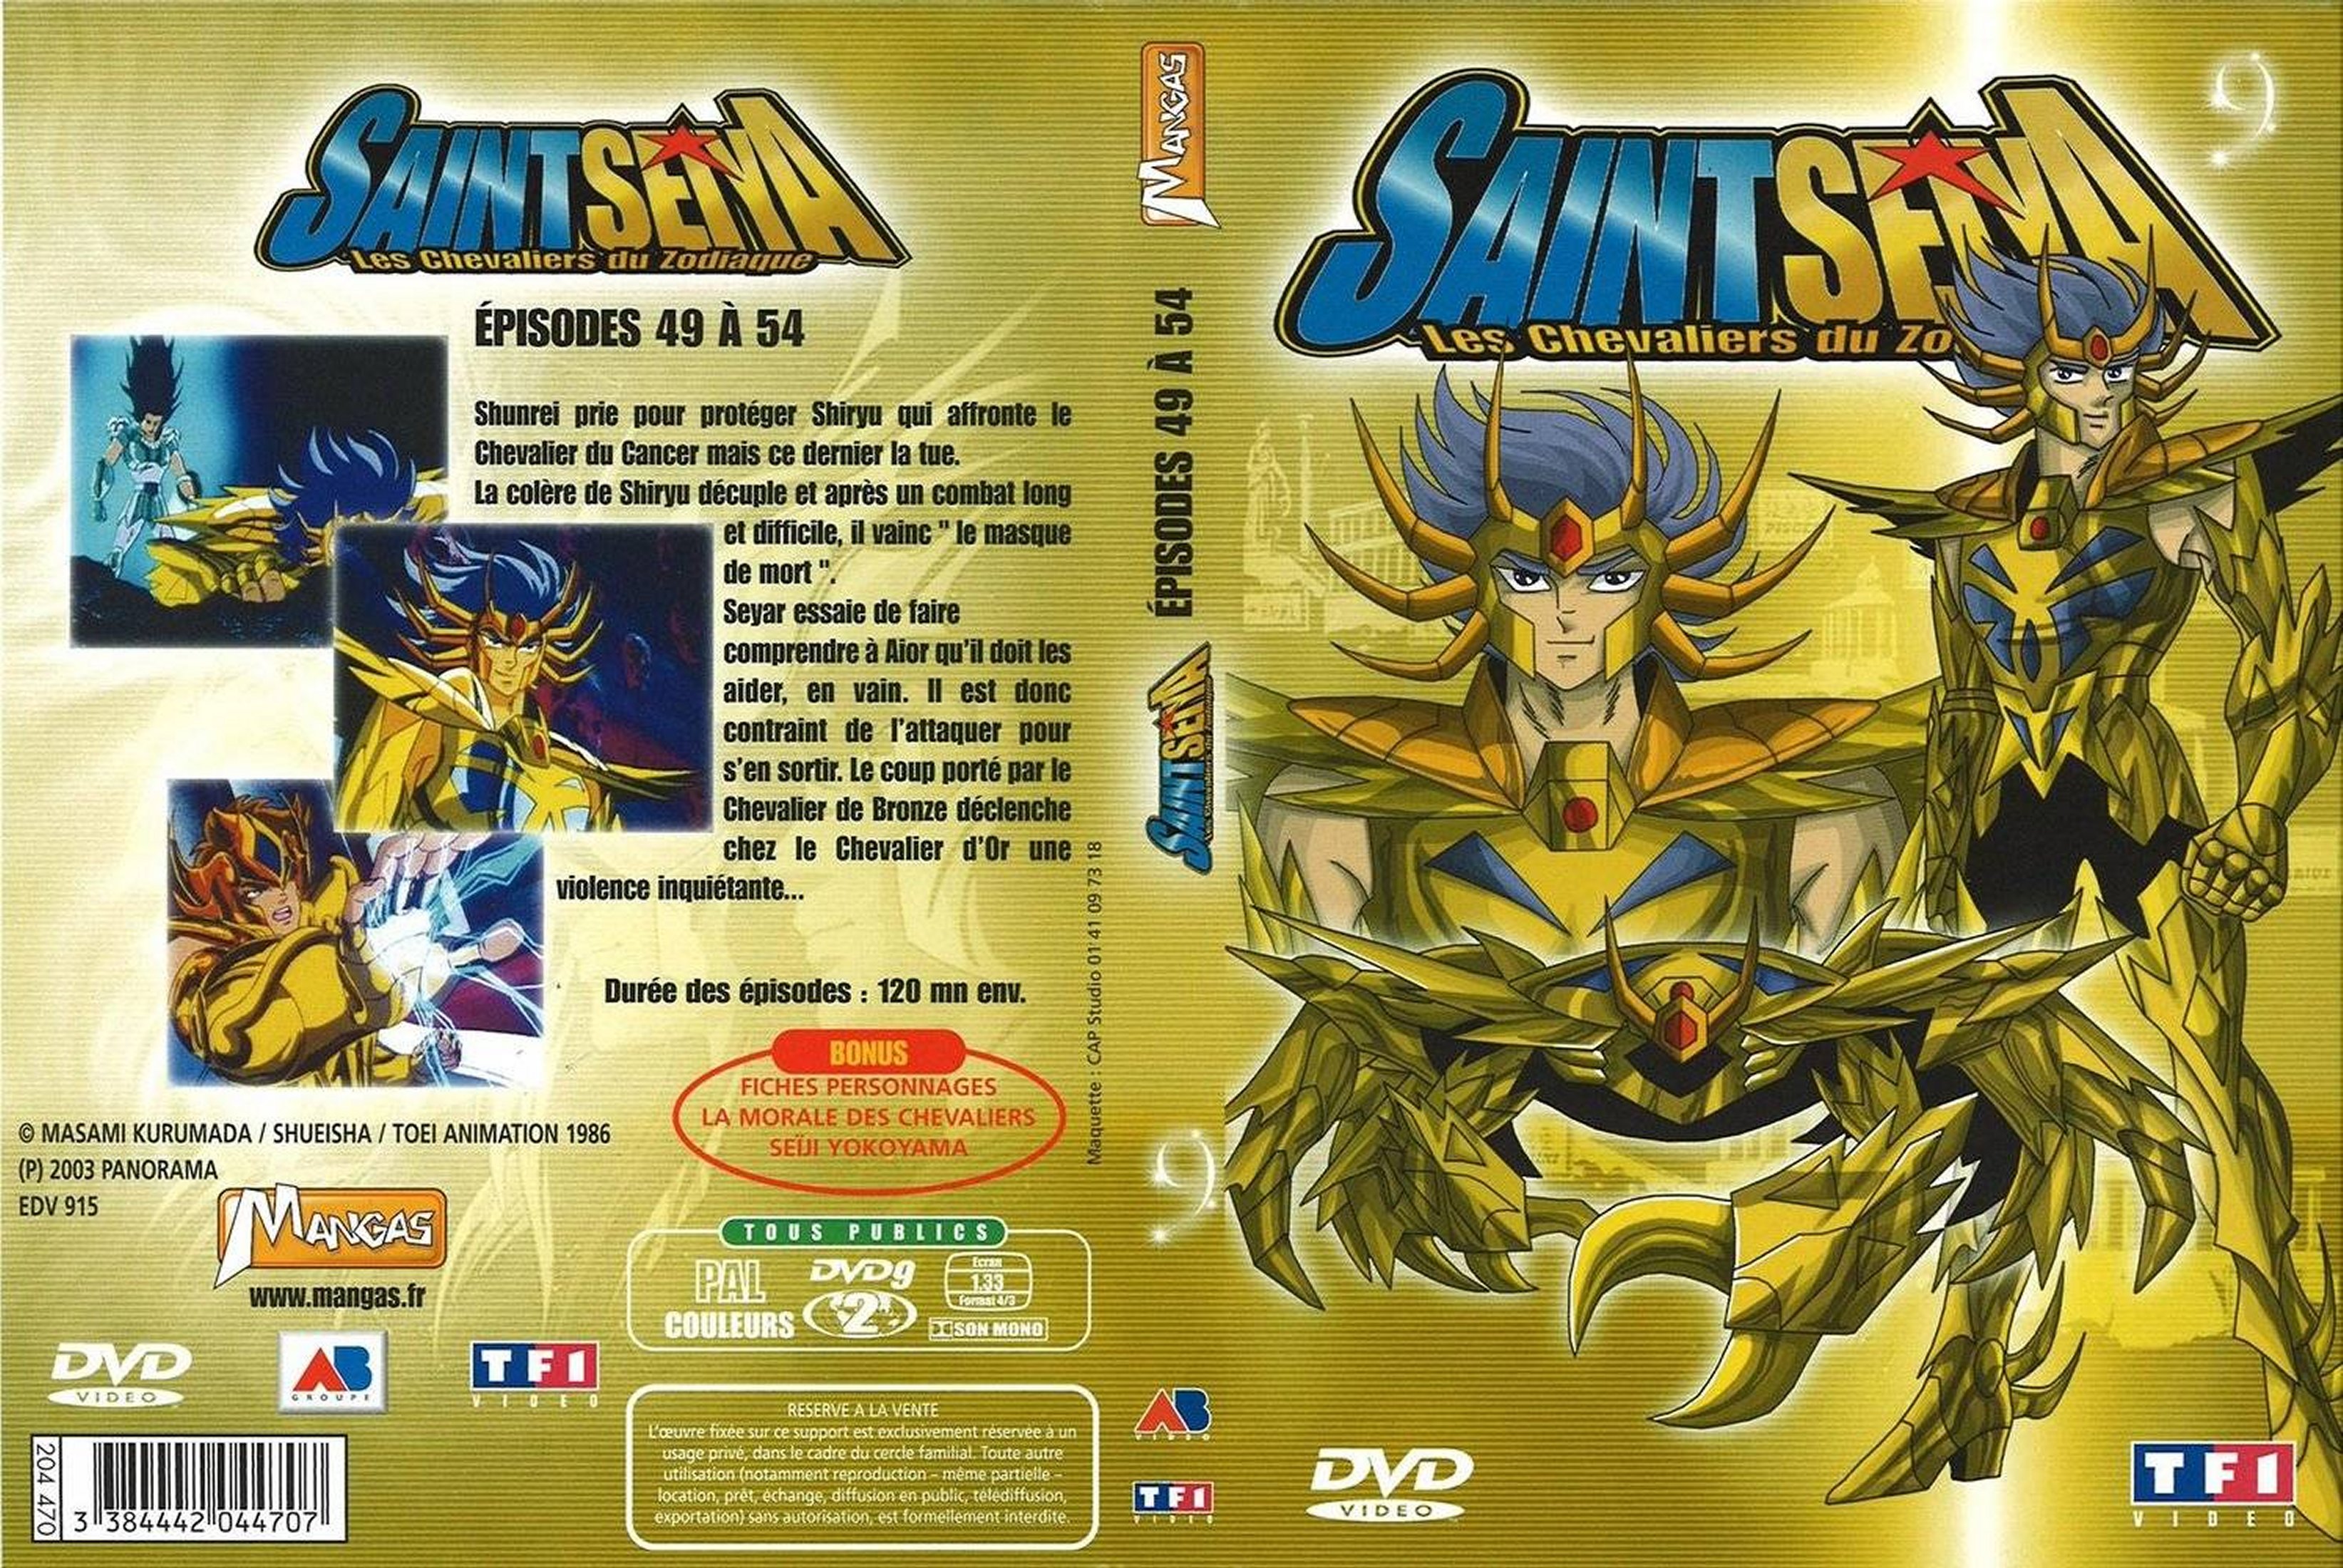 Jaquette DVD Saint Seiya vol 09